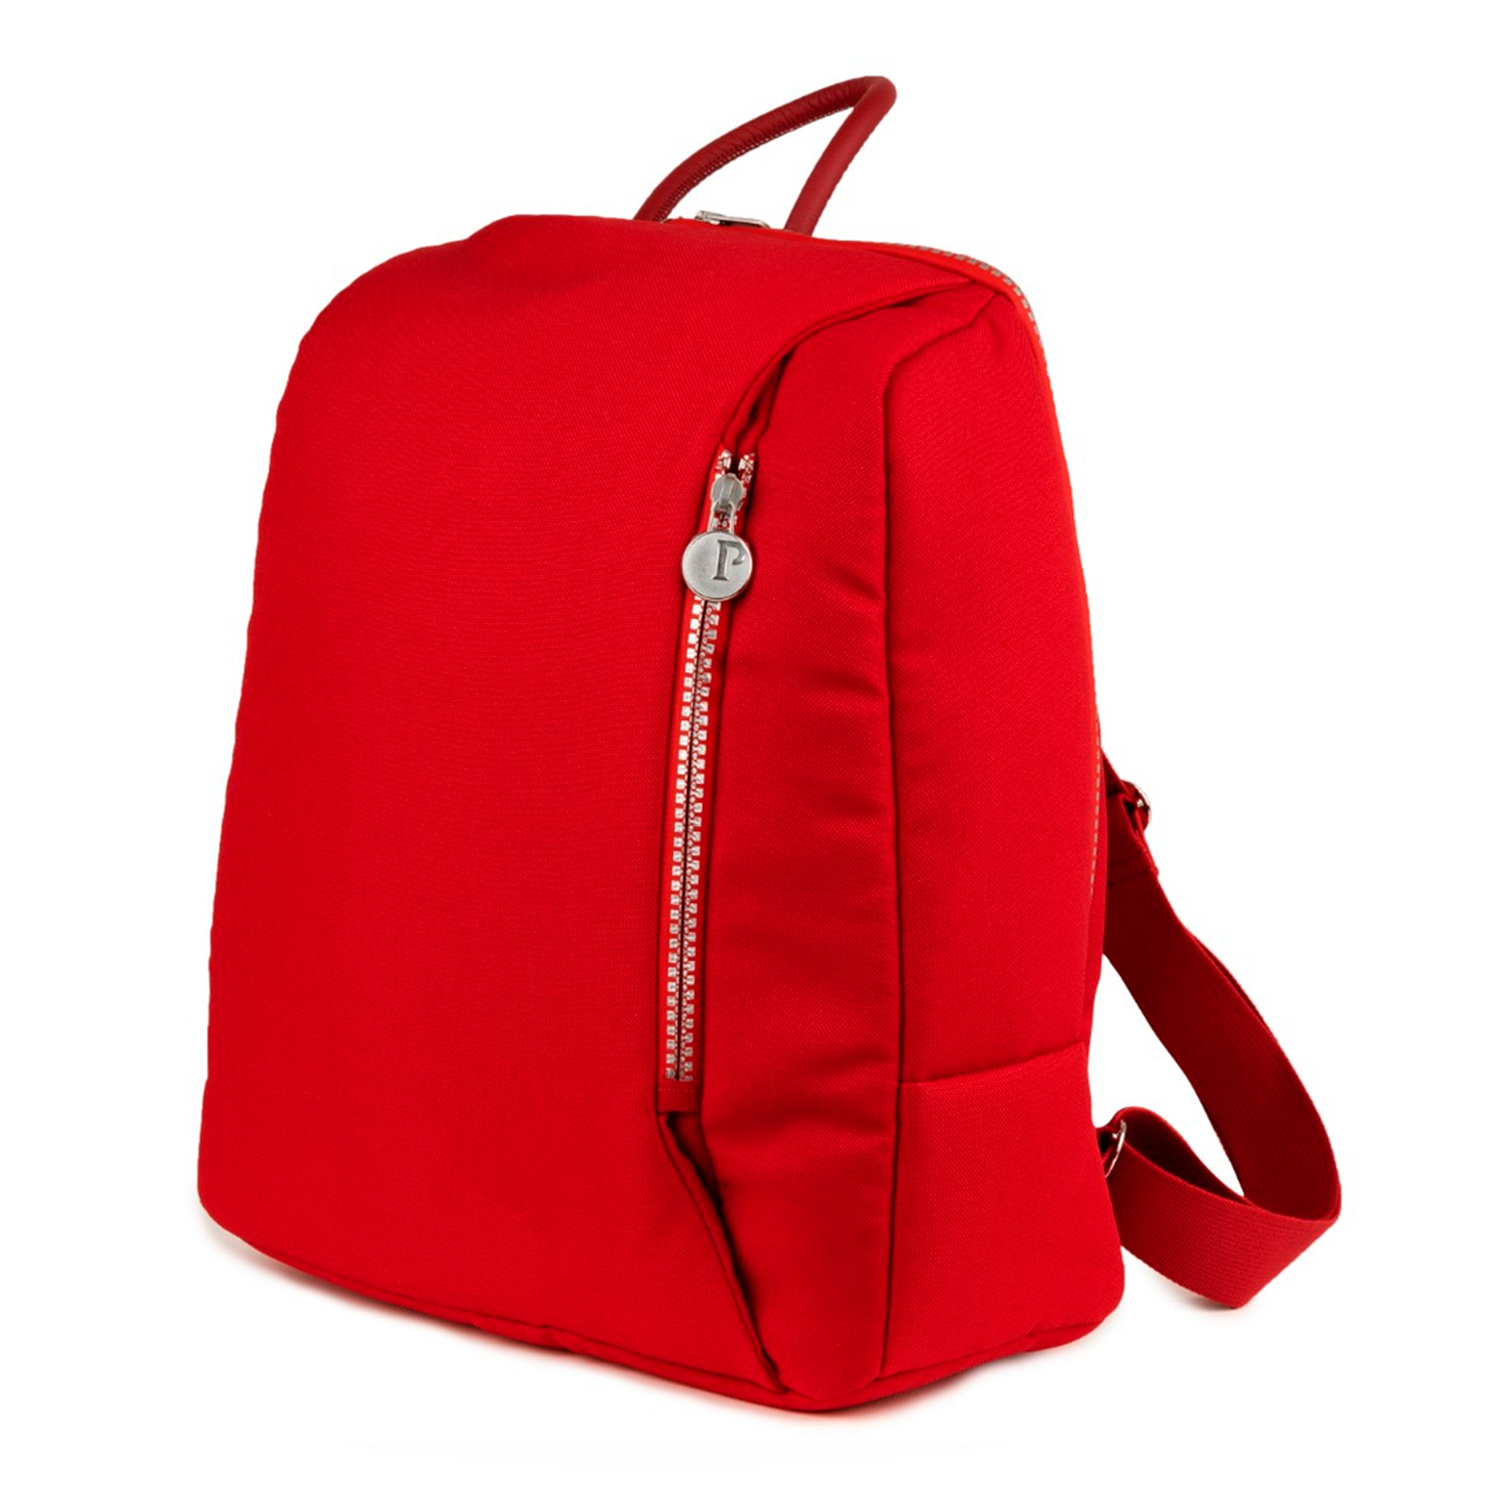 Рюкзак BACKPACK RED SHINE Peg Perego peg perego рюкзак backpack